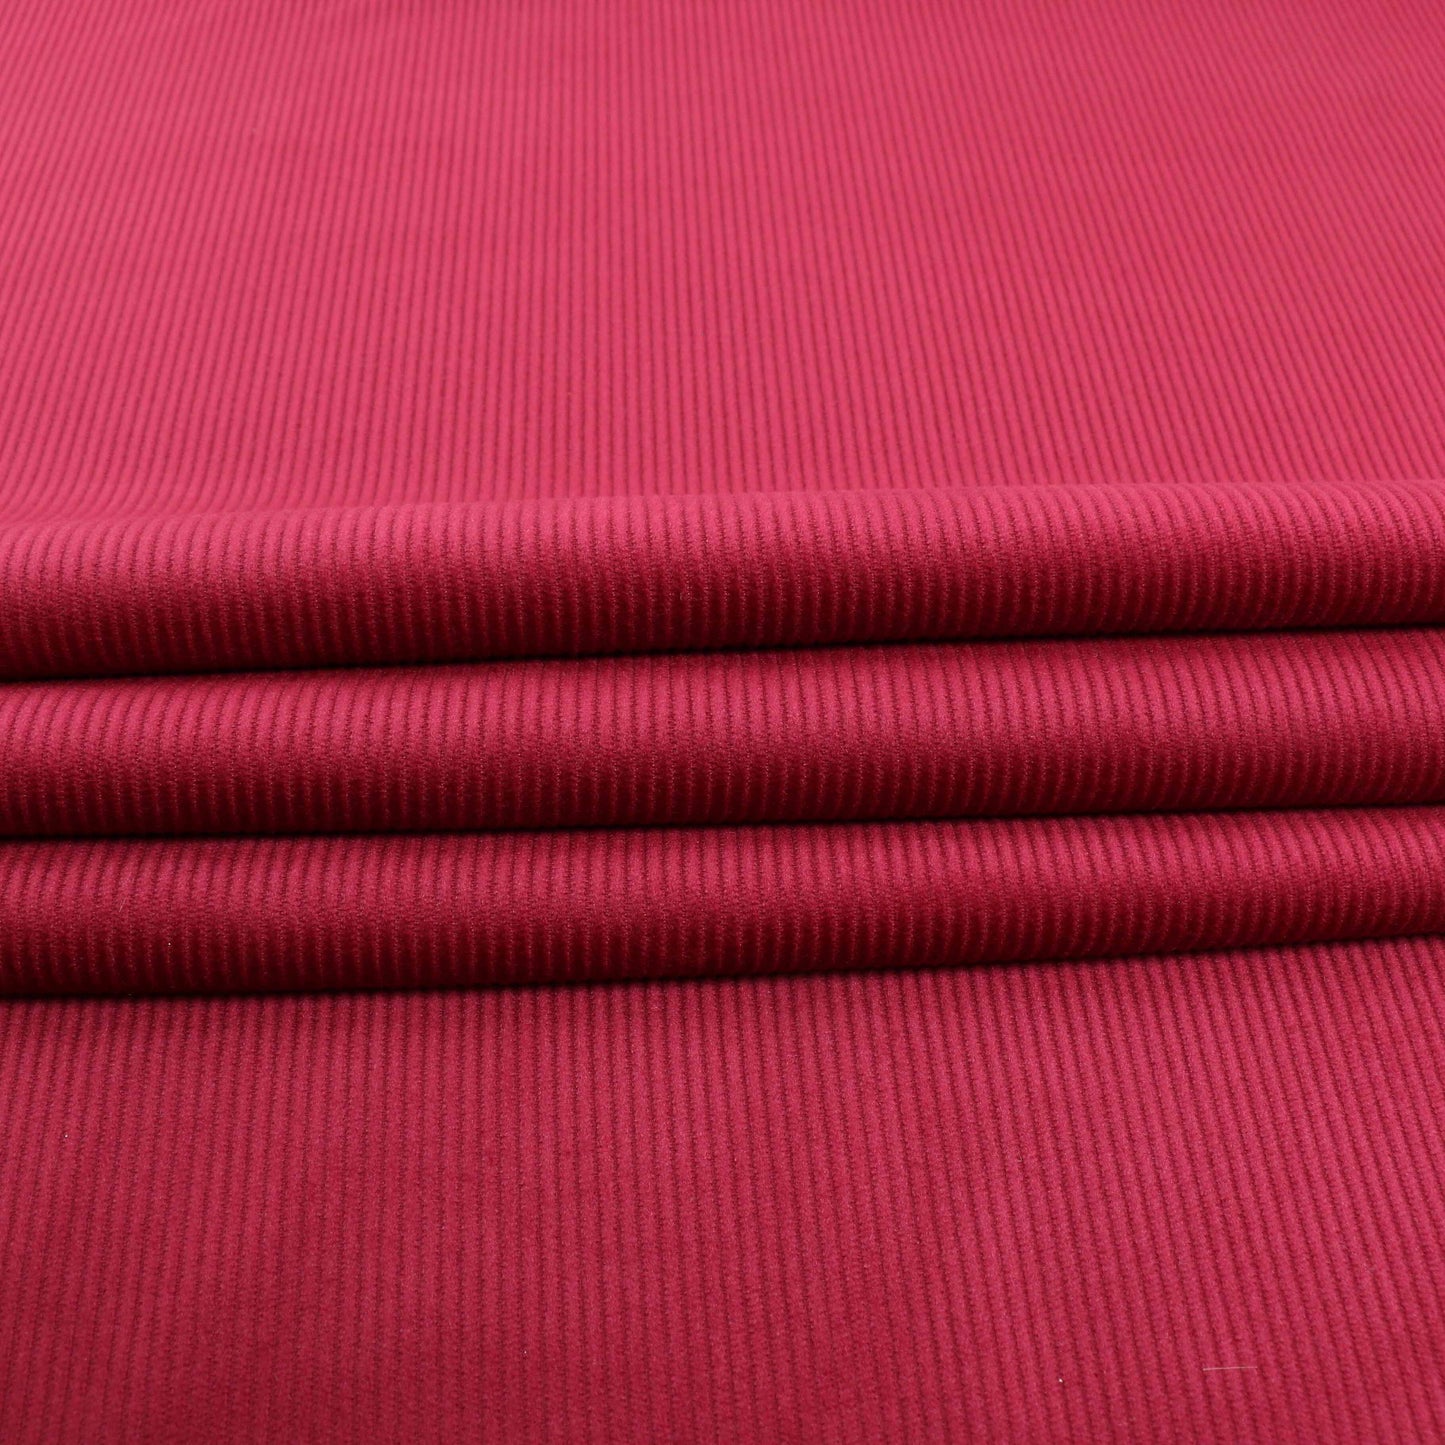 Cotton Velvet fabric - Pinky Red